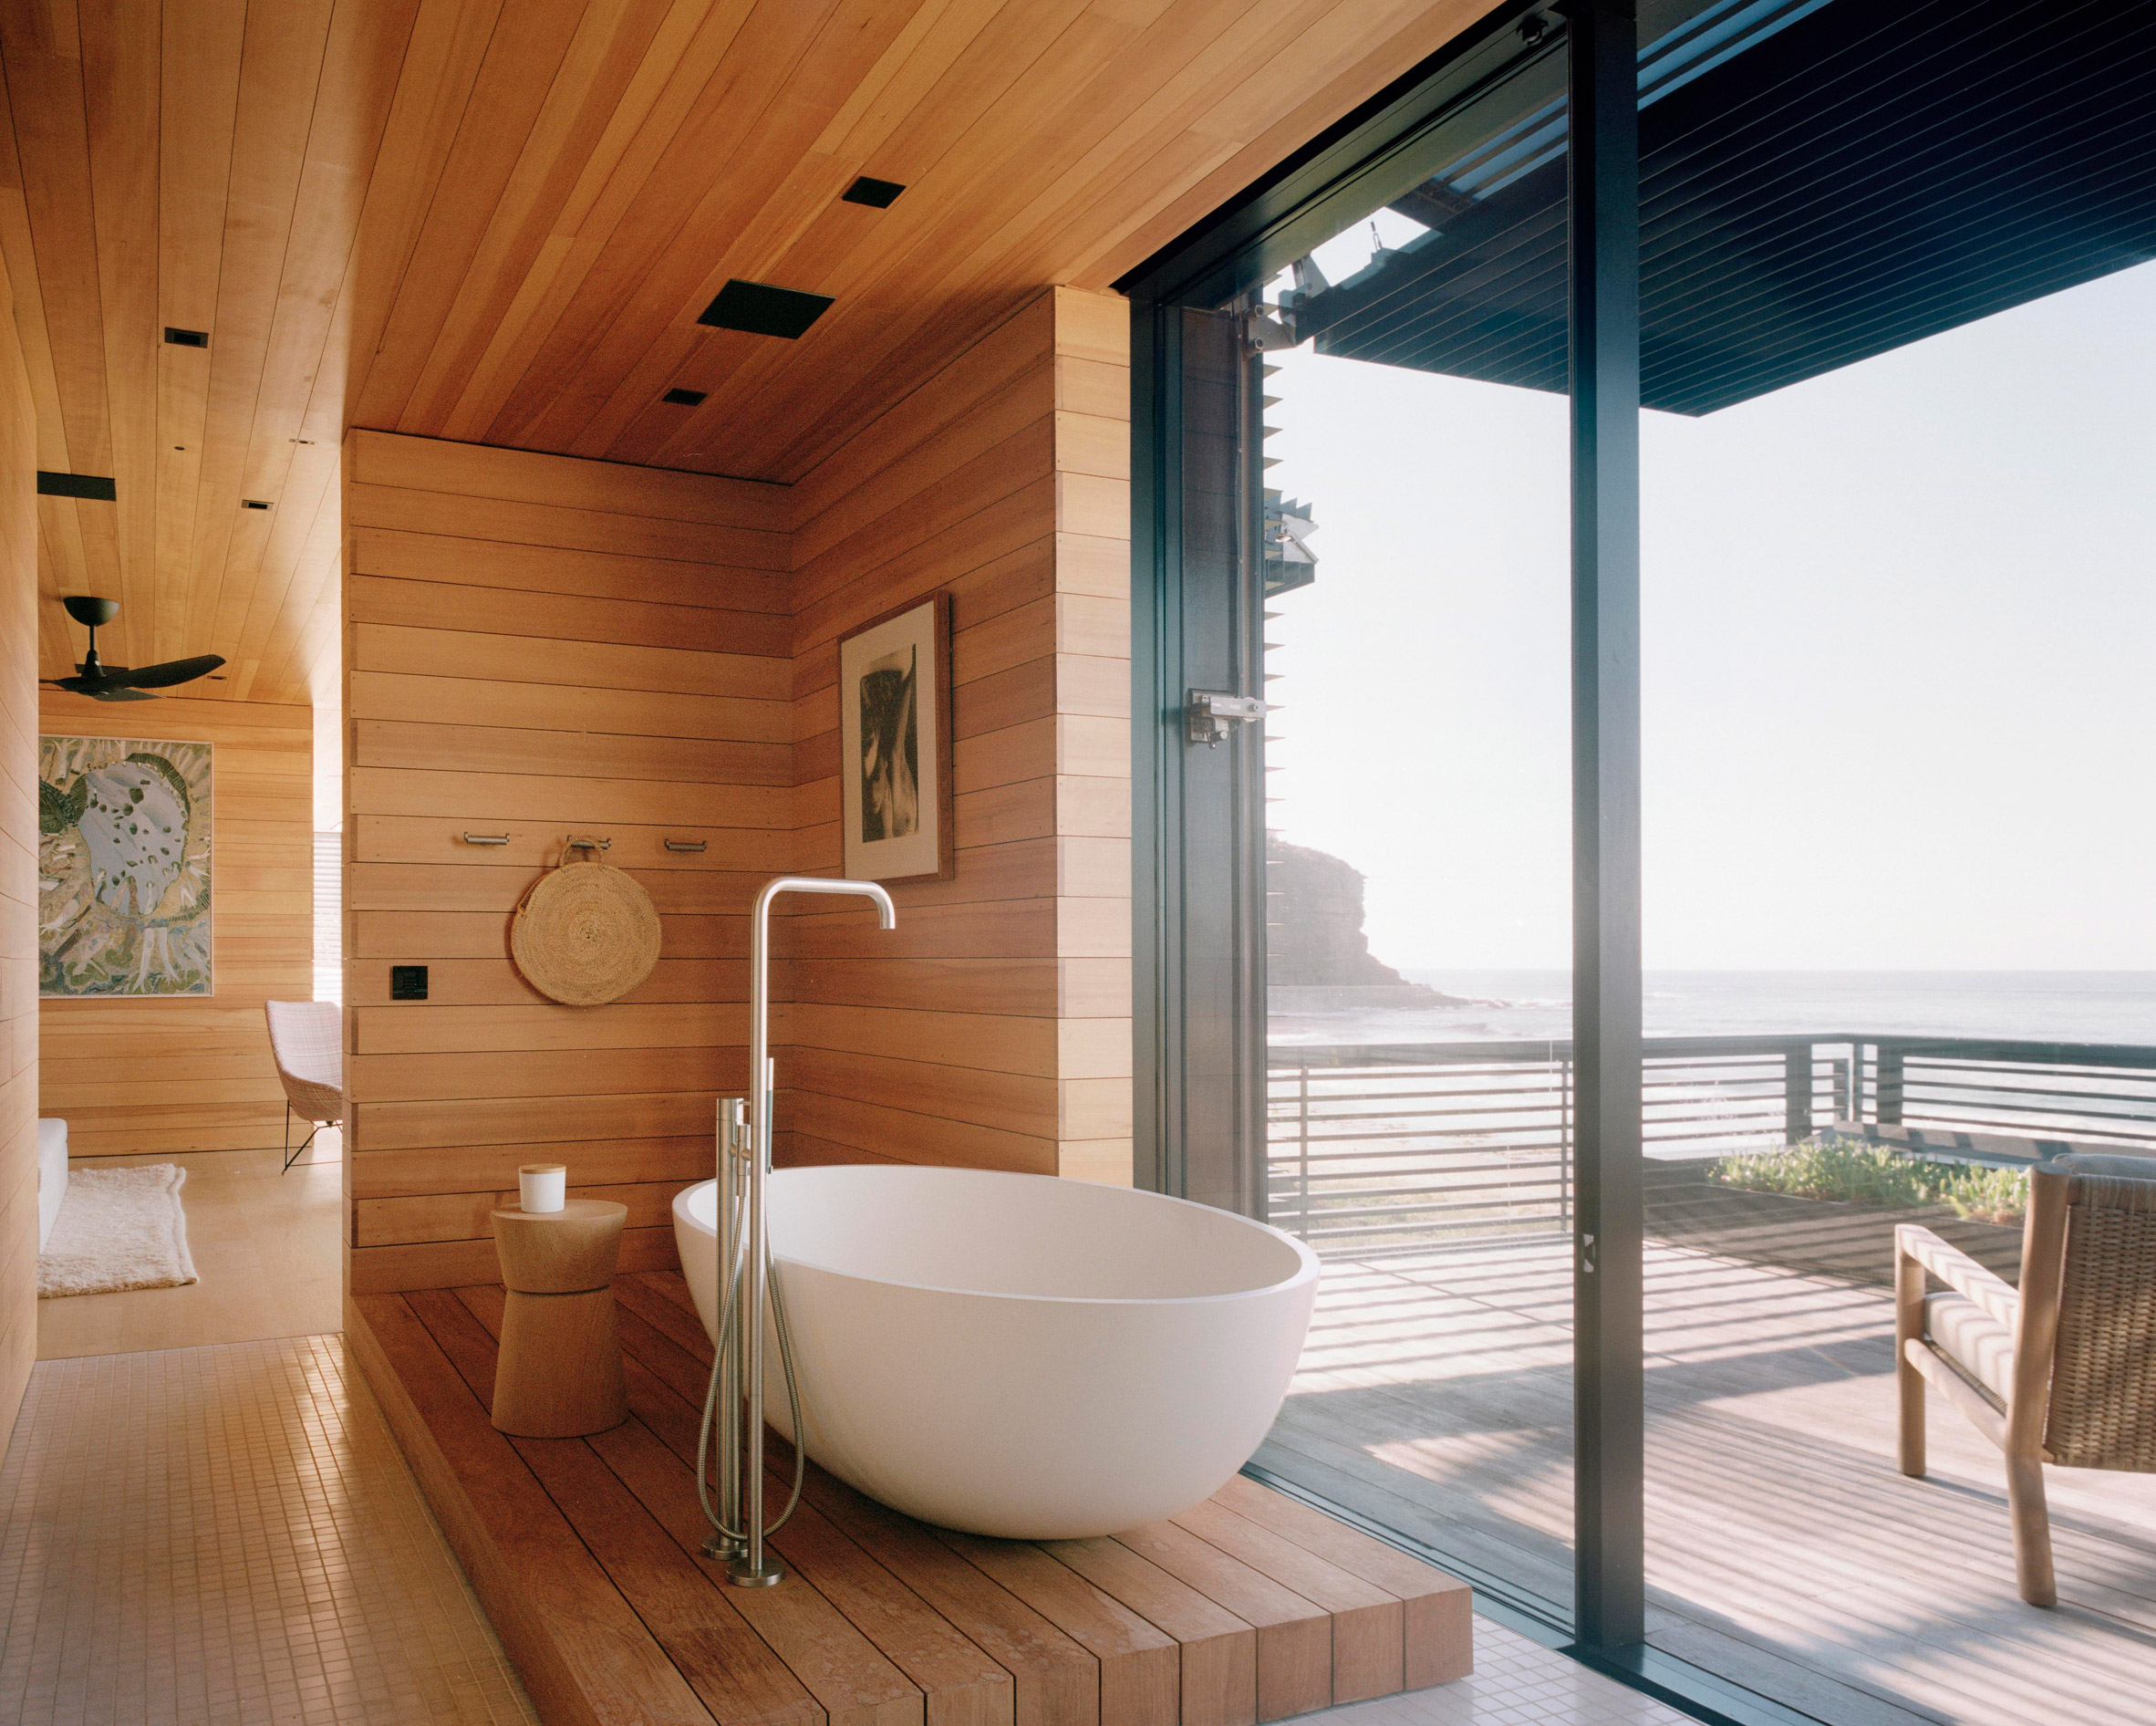 Wood-lined bathroom